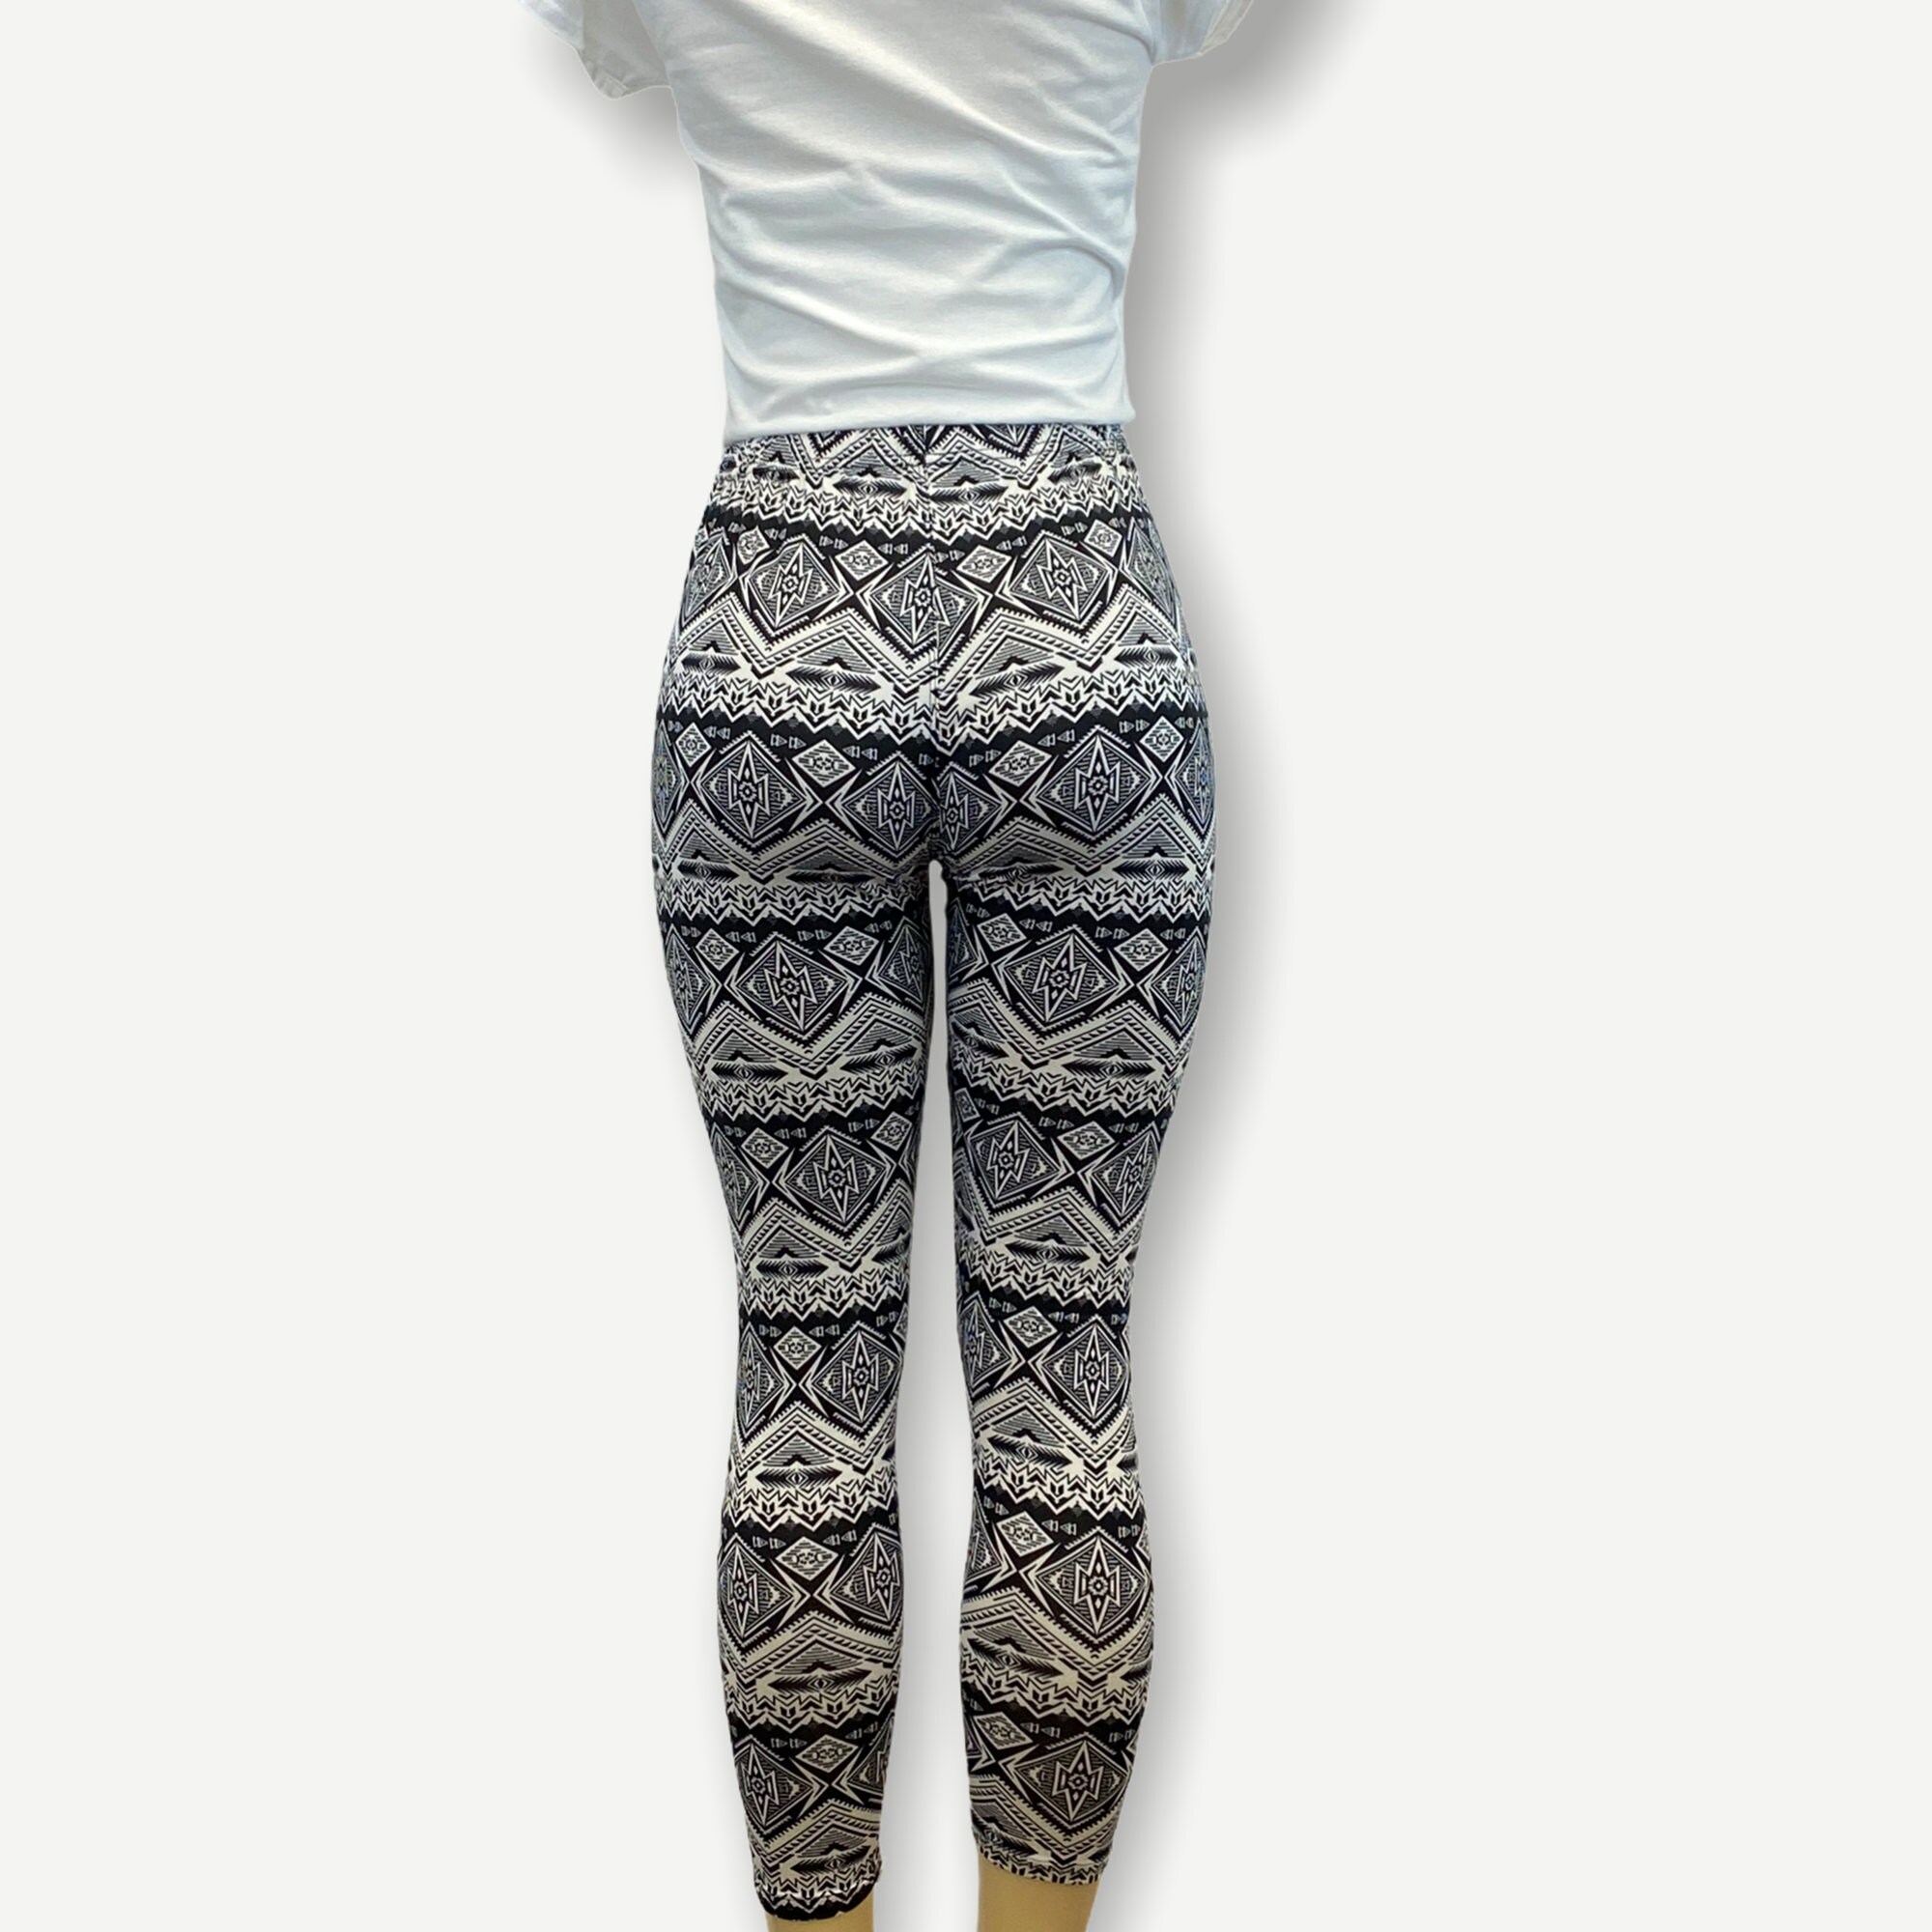 Women's clothing yoga pants leggings sewing pattern SALE | Etsy